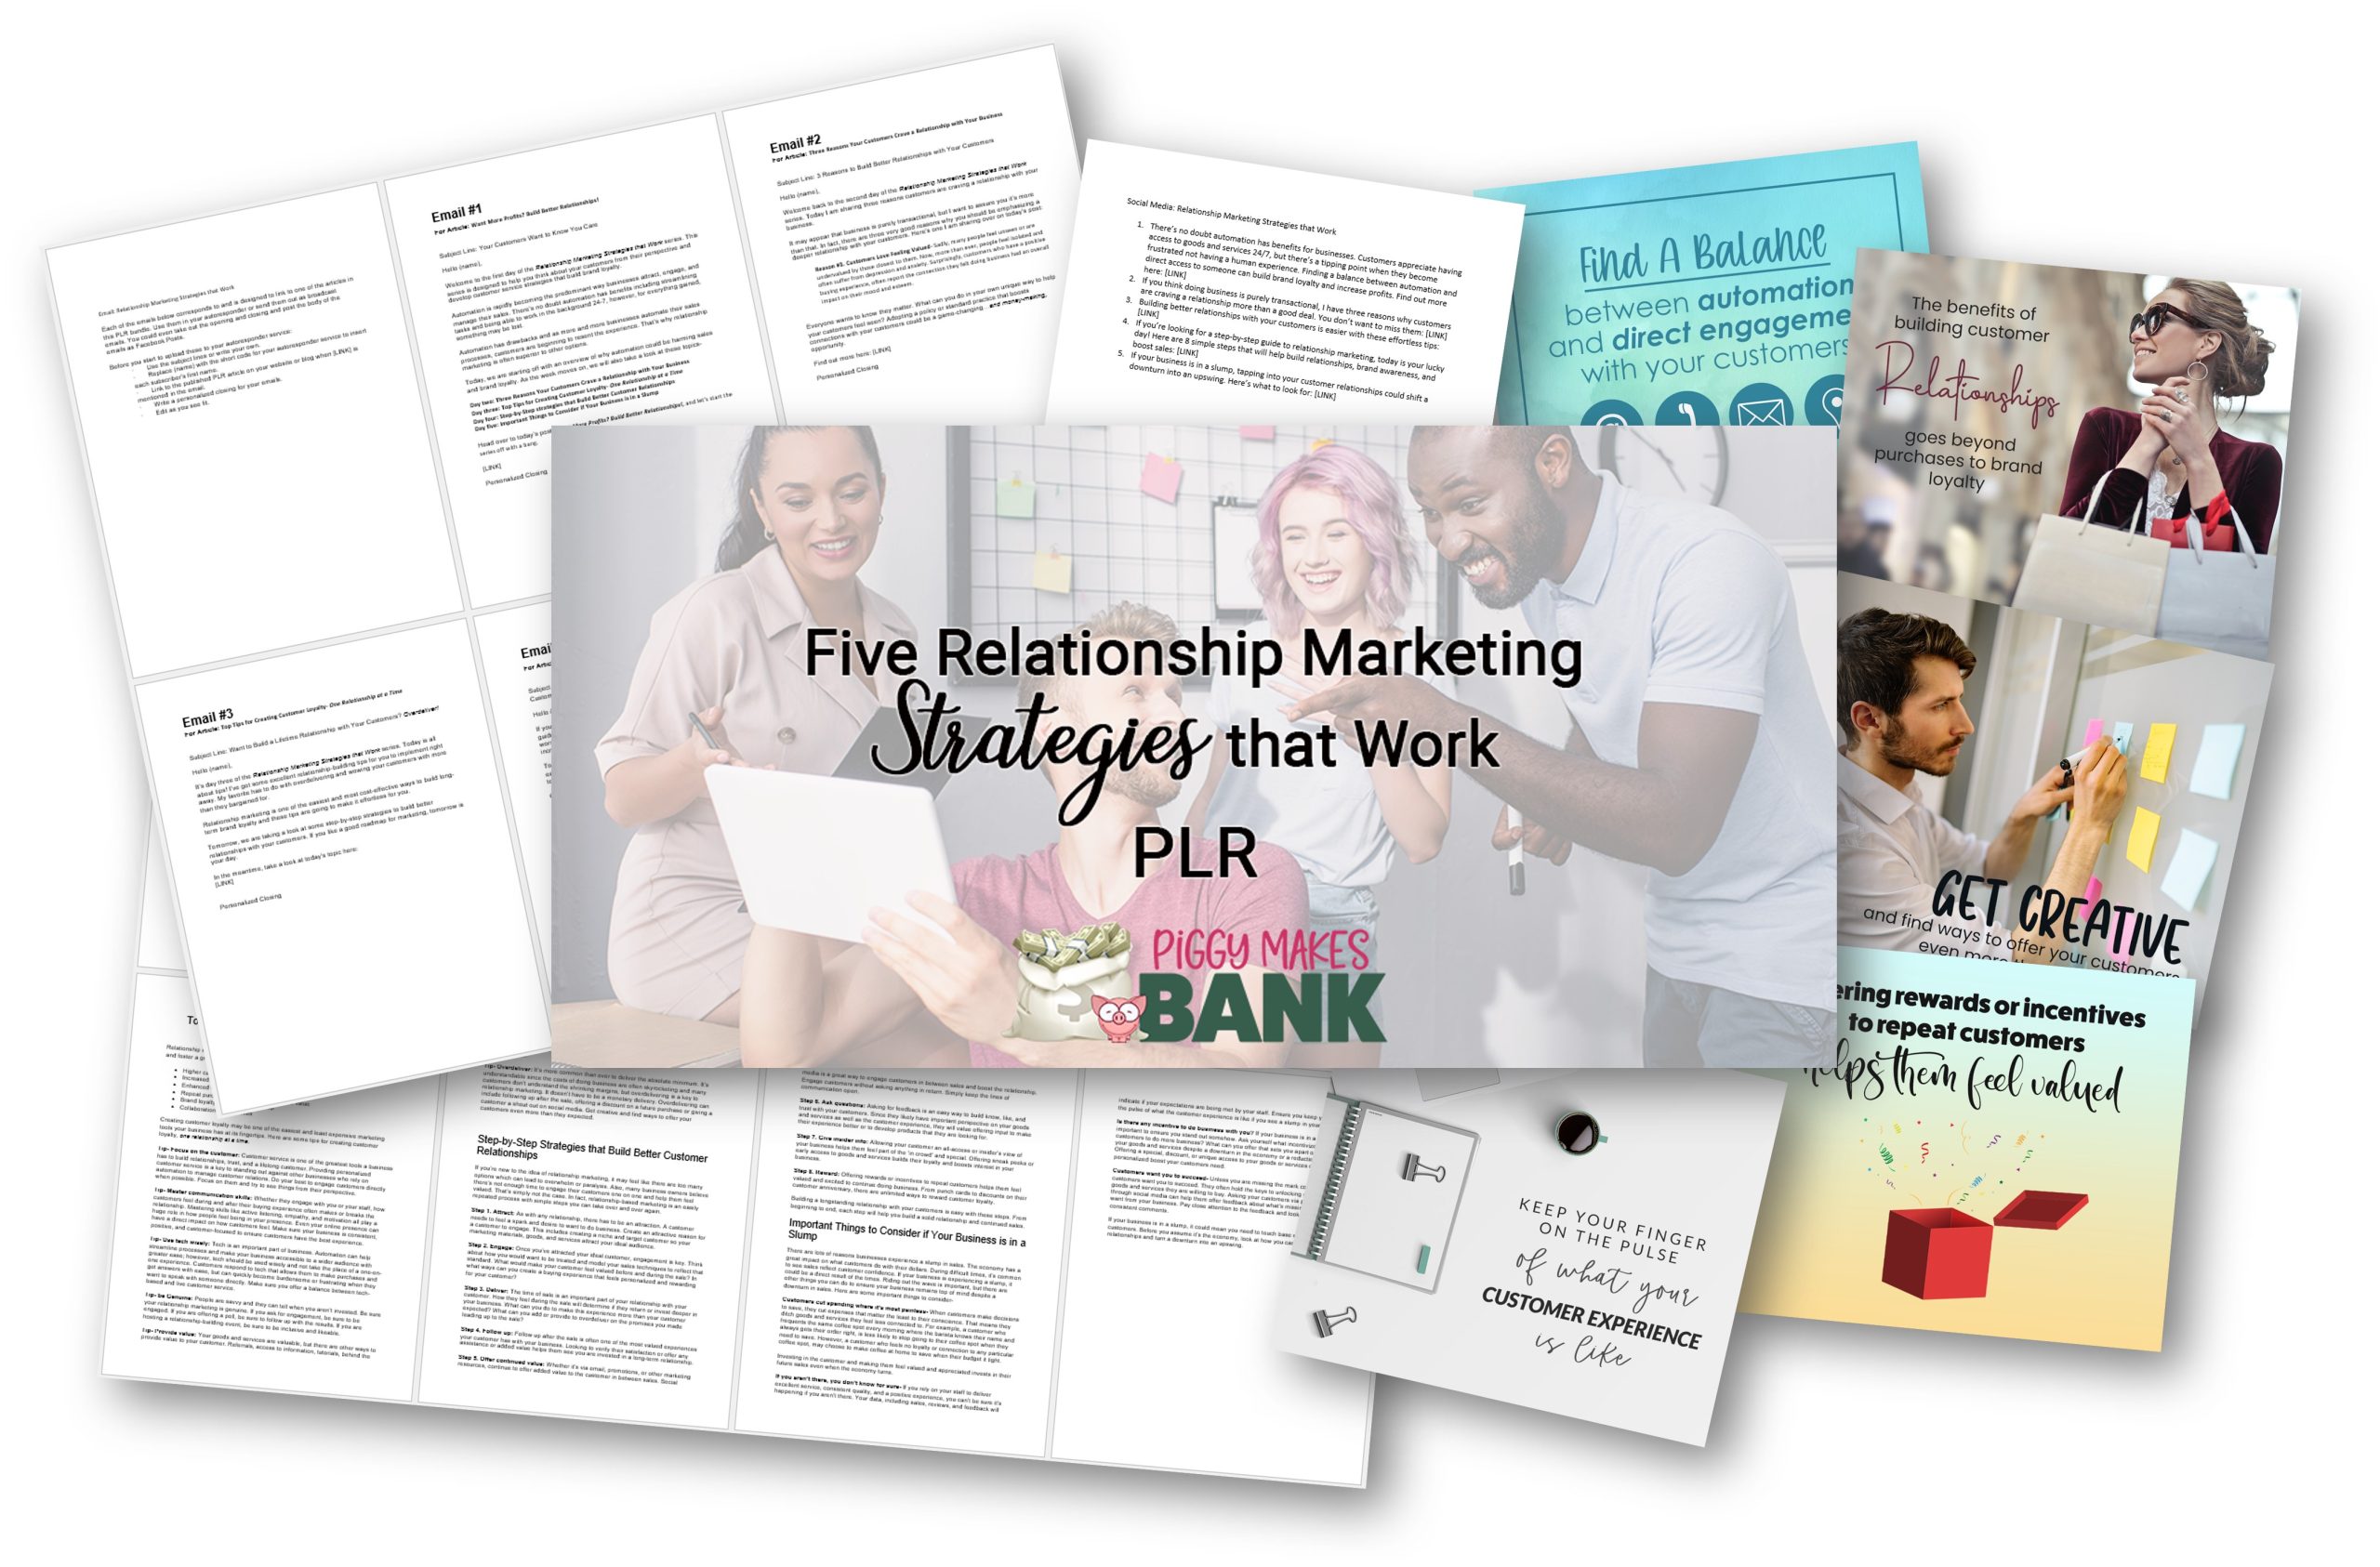 relationship marketing strategies that work plr